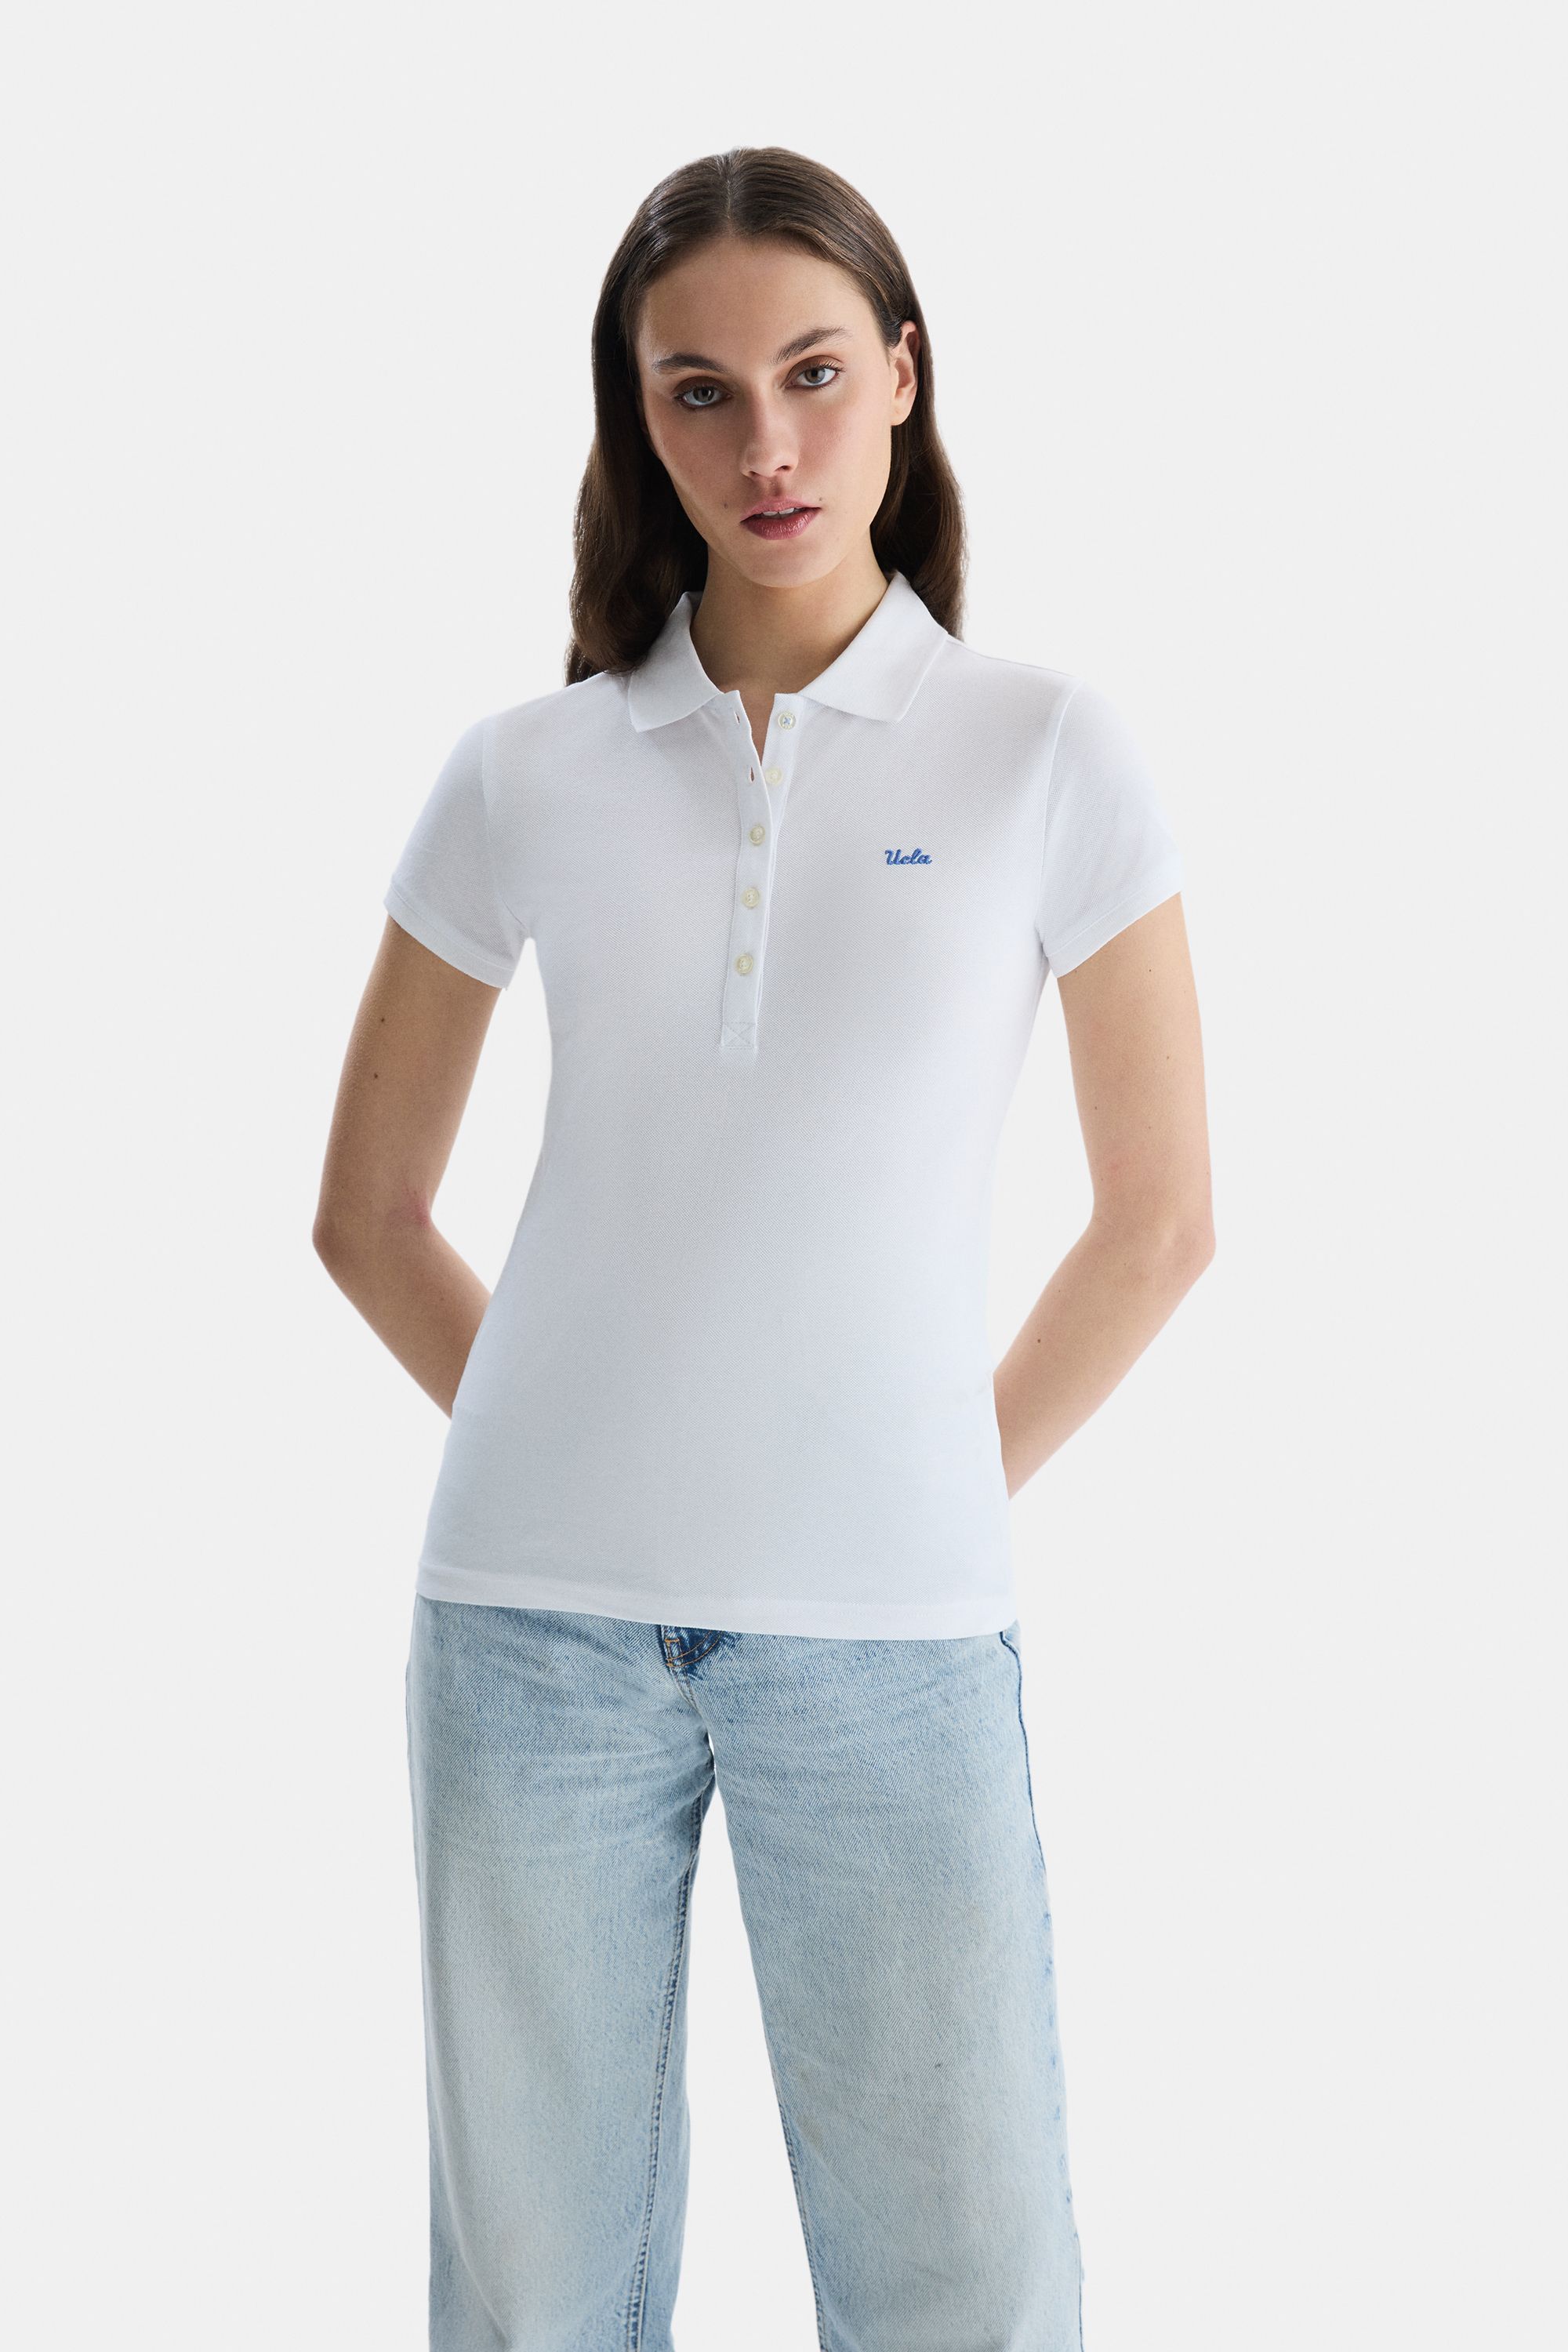 SHAVER Beyaz Polo Yaka Nakışlı Standard Fit Kadın Tshirt